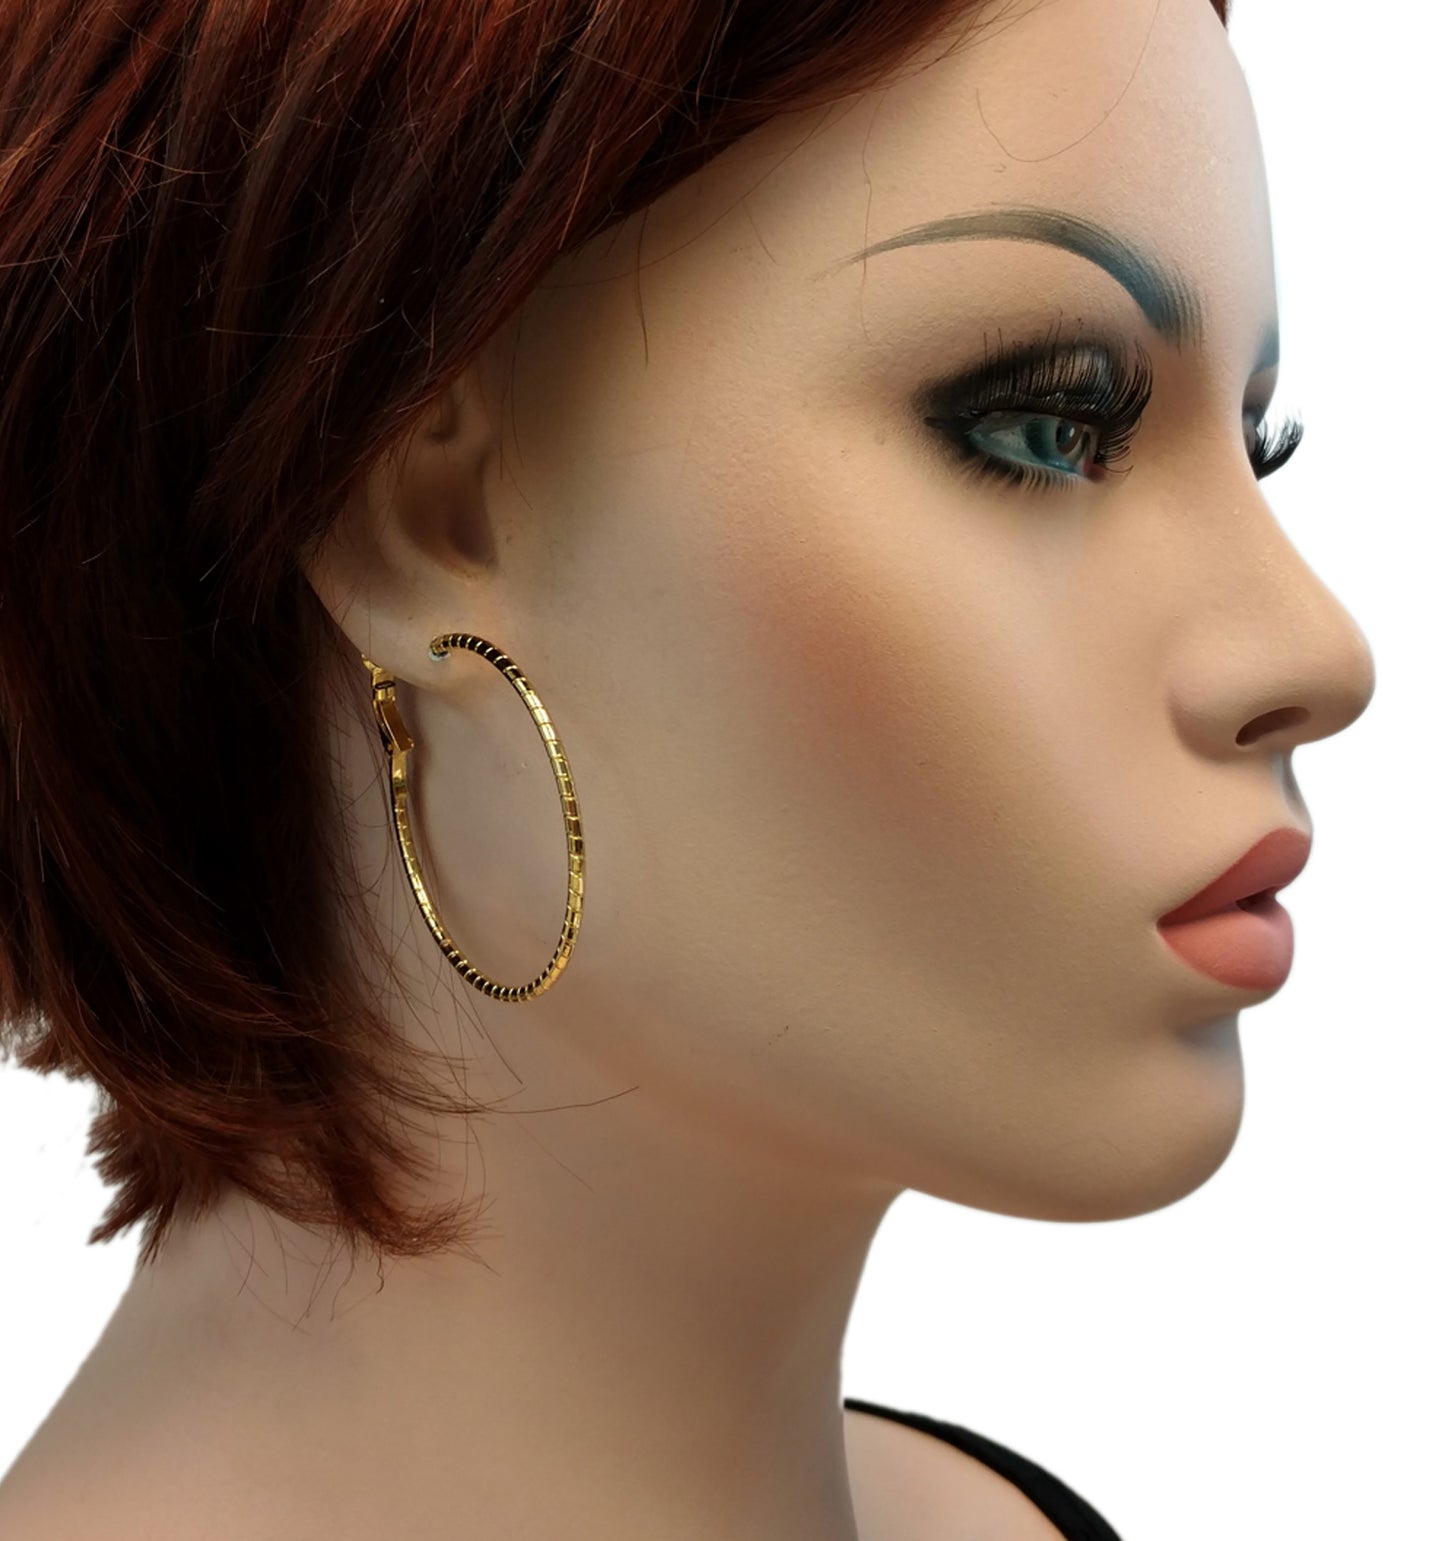 Gold Tone Textured Hoop Earrings 1 7/8" Surgical Steel Post